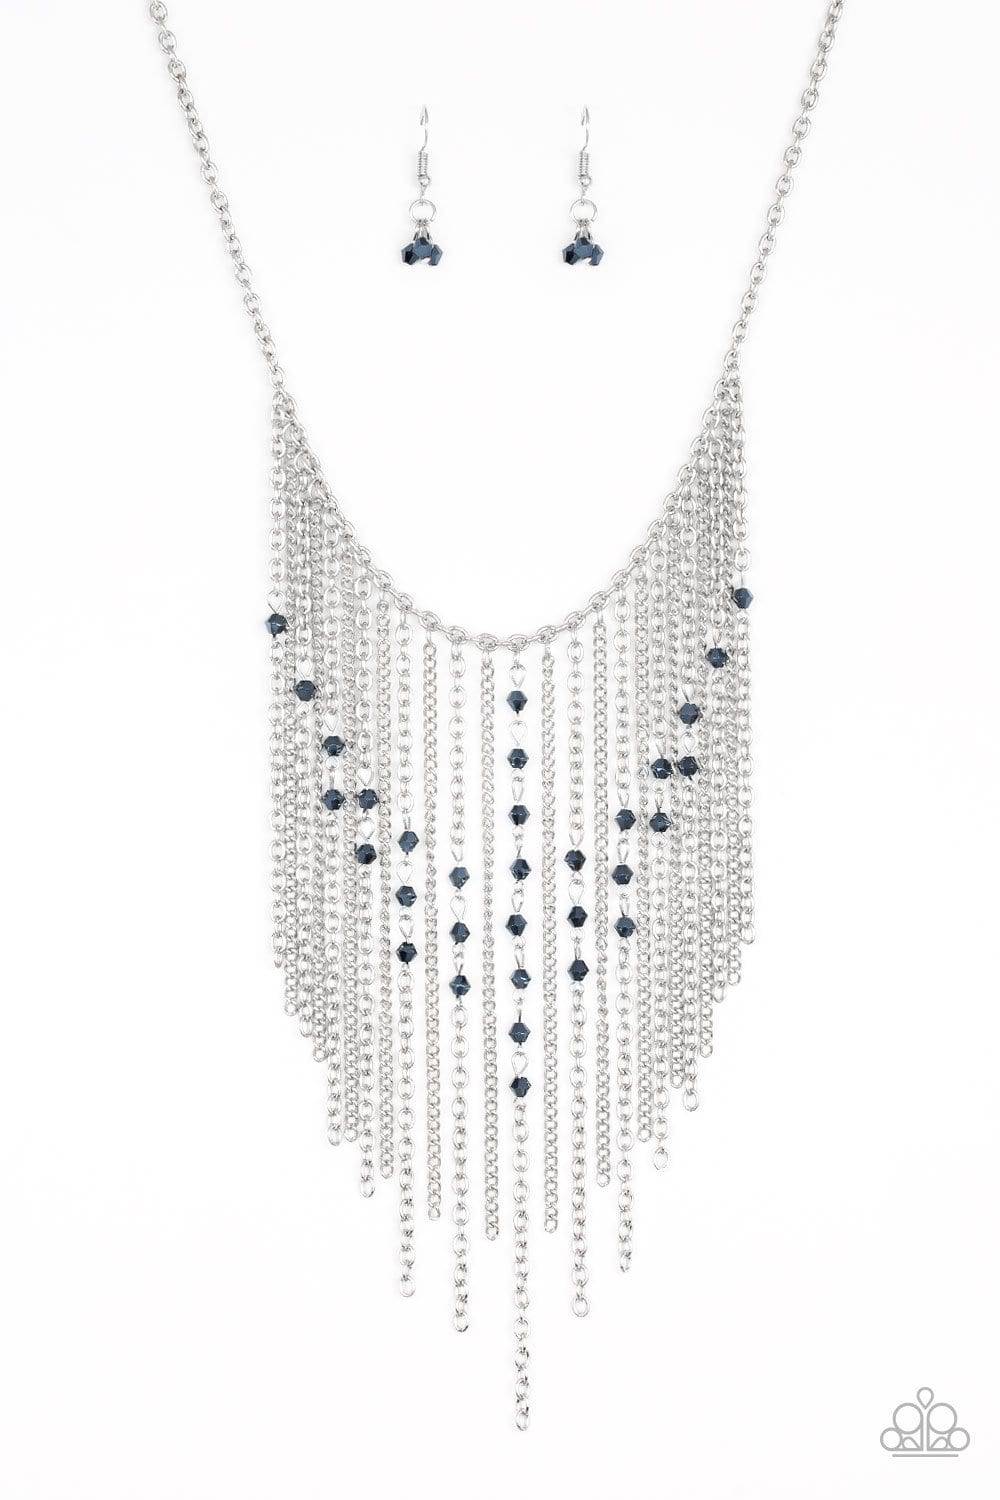 First Class Fringe - Blue Necklace - Paparazzi Accessories - GlaMarous Titi Jewels